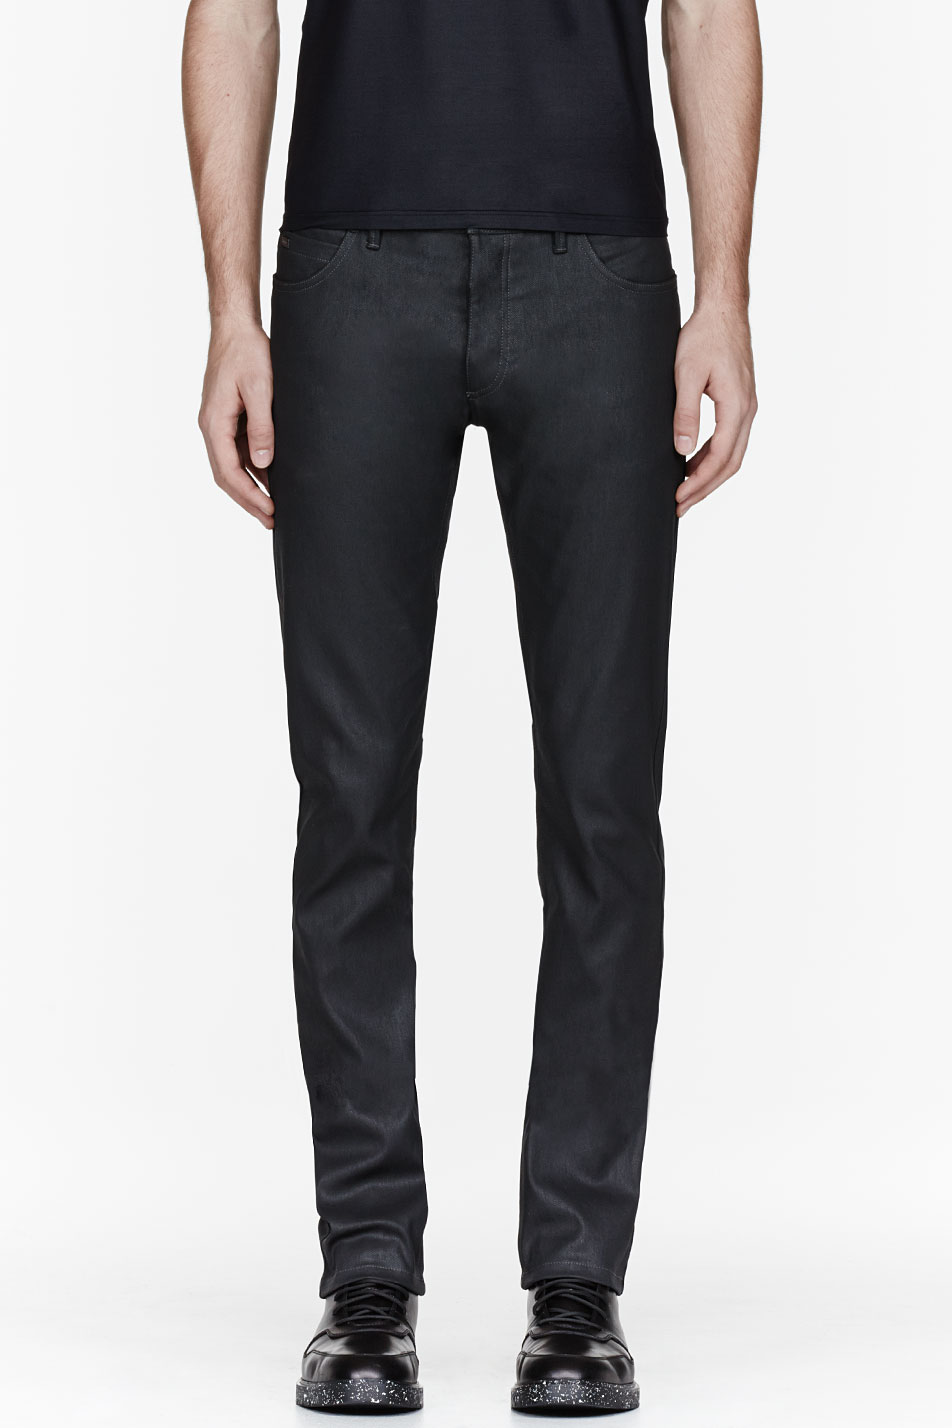 Lyst - Calvin Klein Black Waxed Denim Serge Jeans in Black for Men